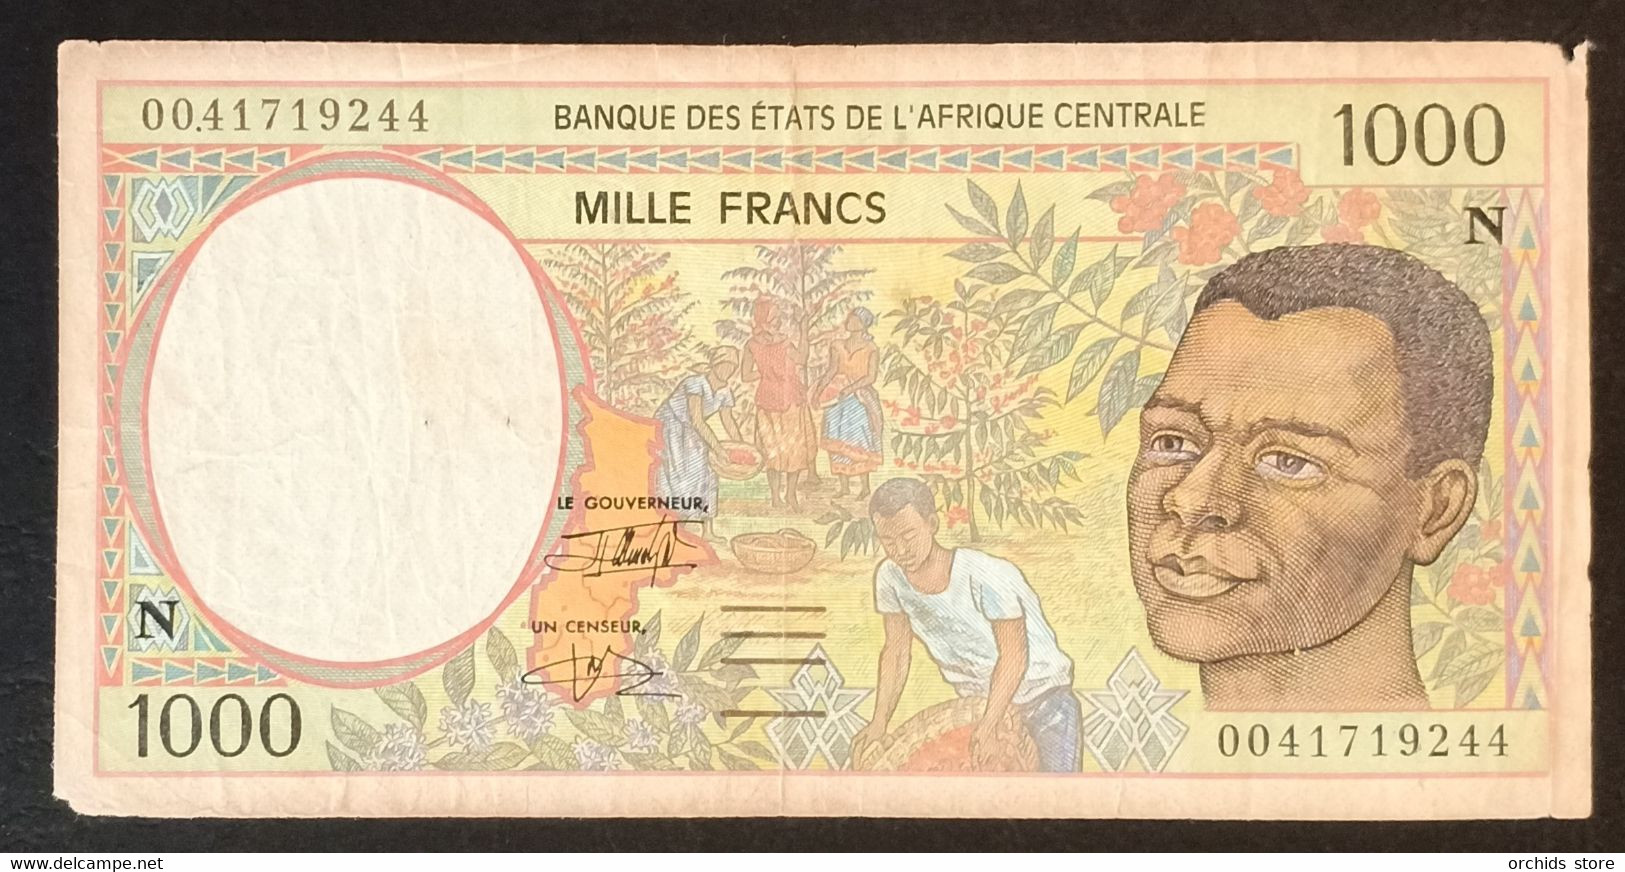 AC2020 - Central African Republic 2000 Banknote 1000 Francs N - EQUATORIAL GUINEA - Guinée Equatoriale